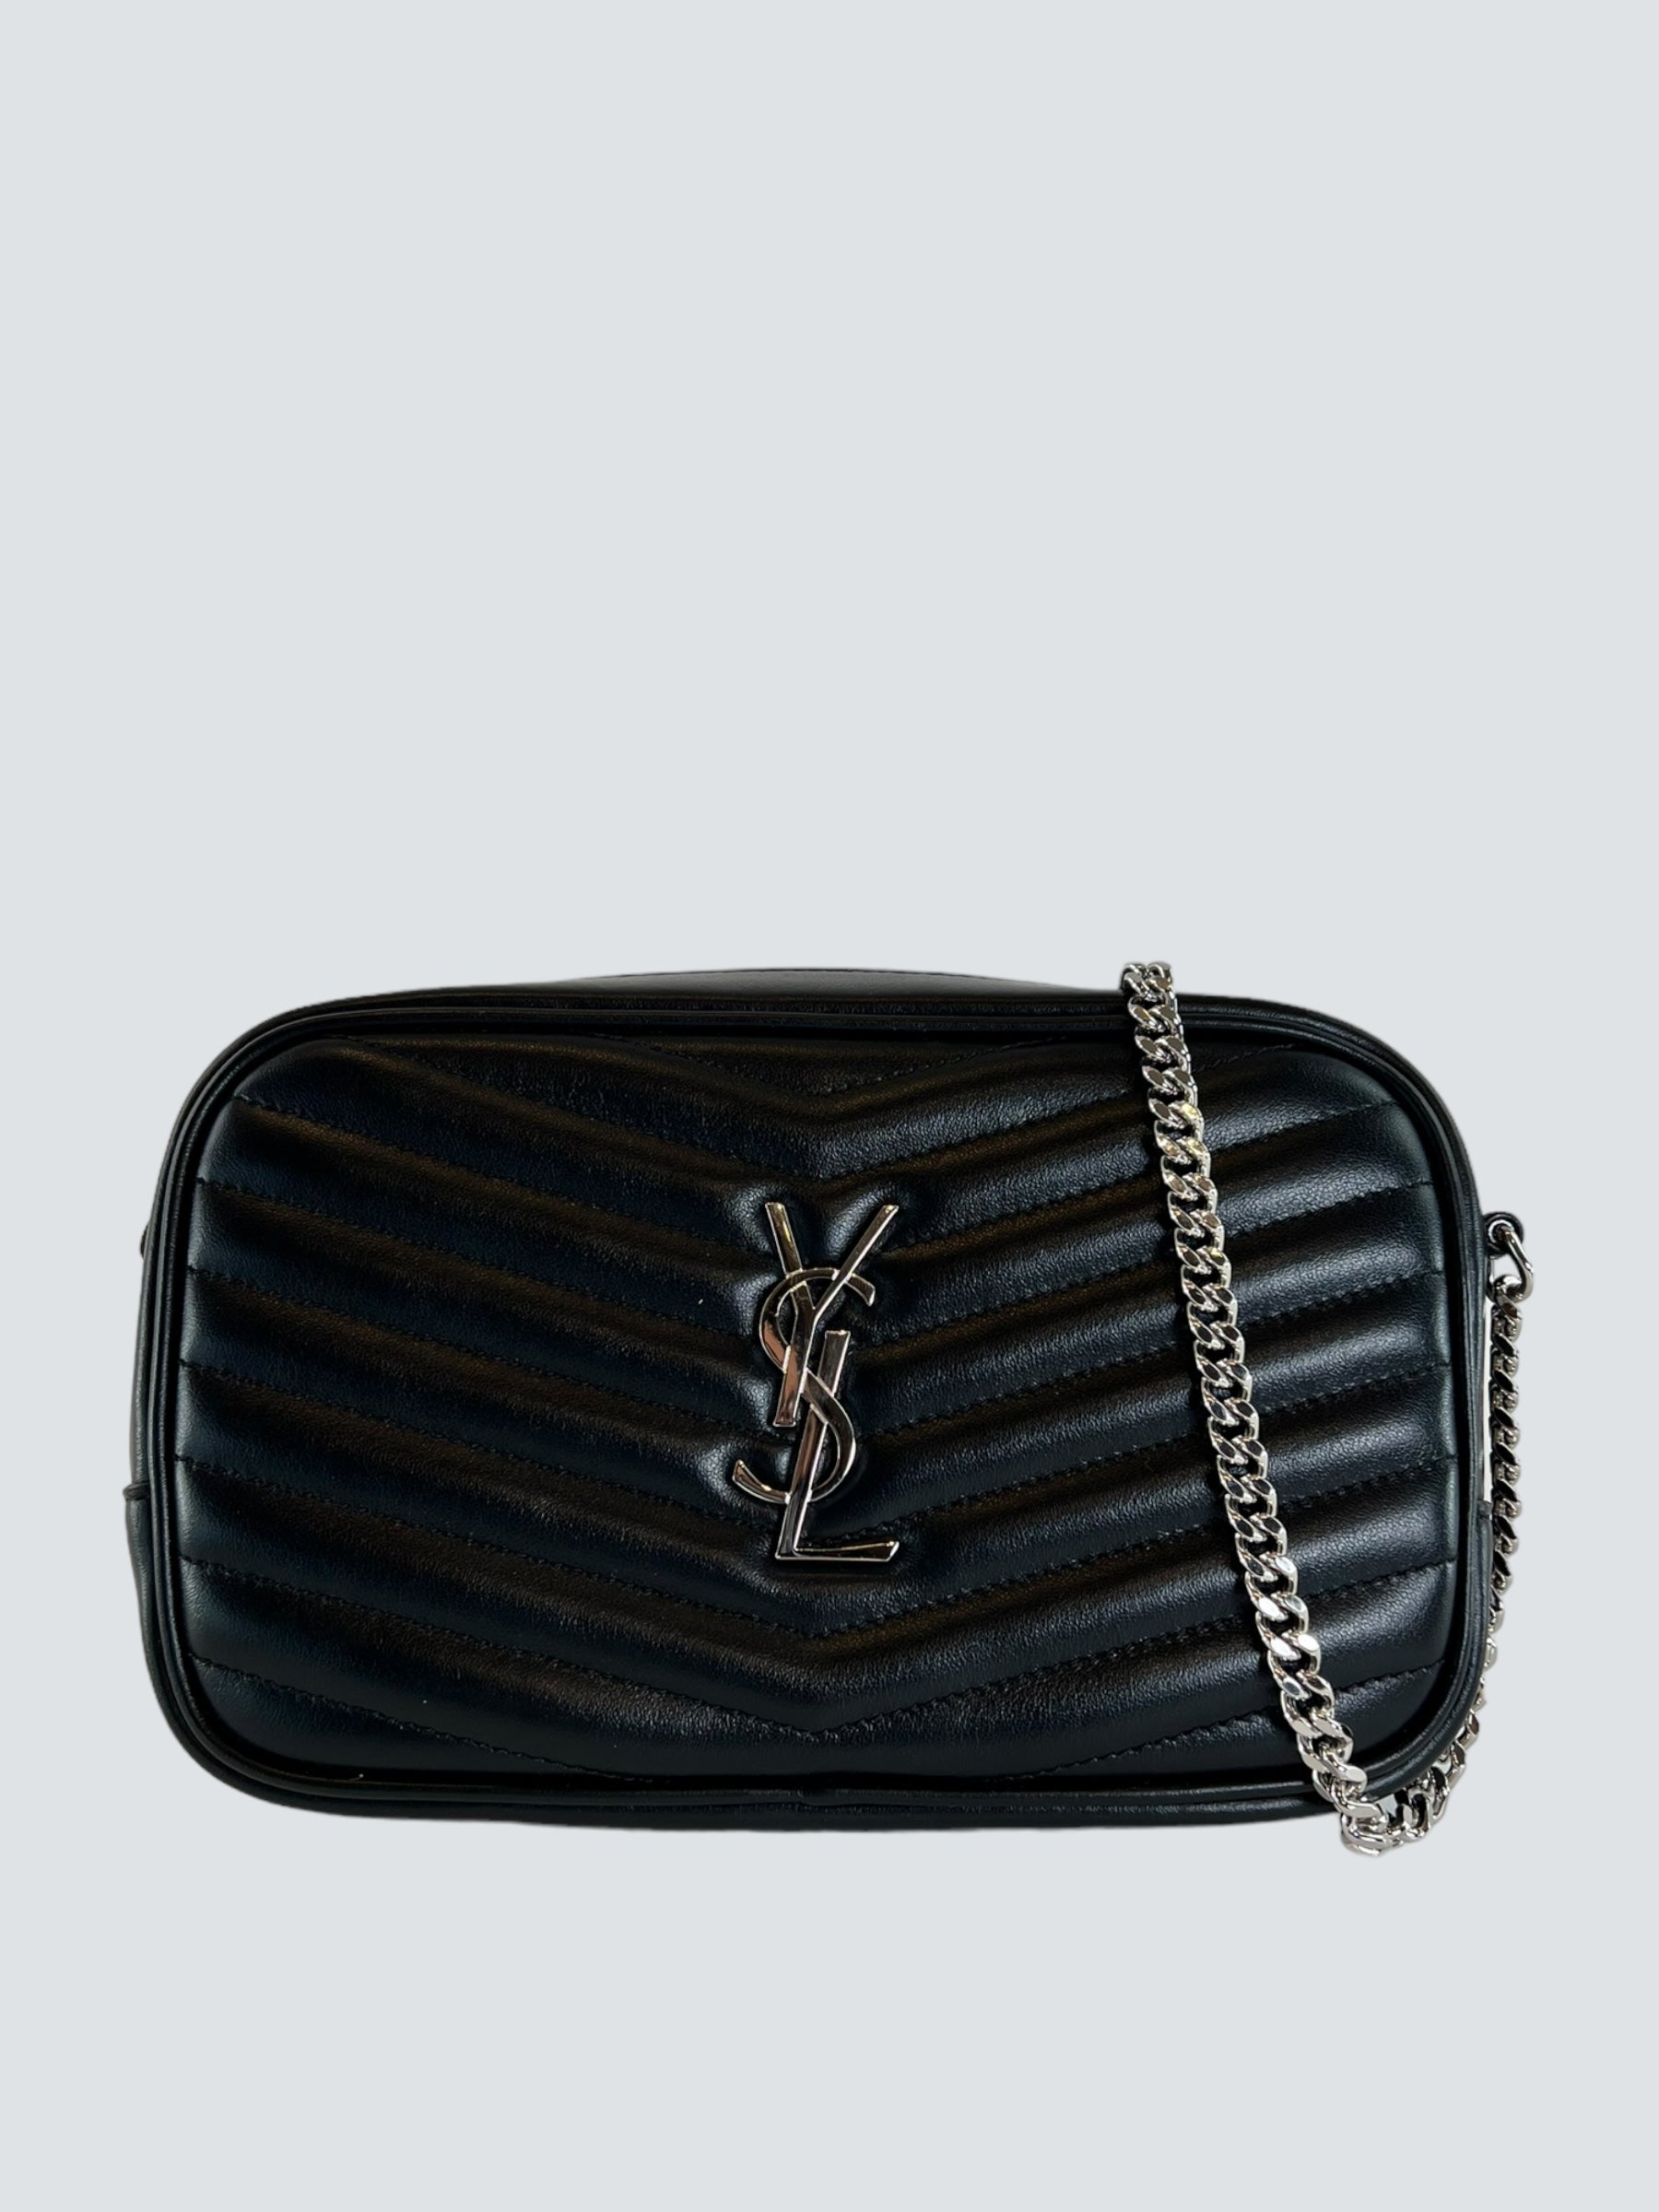 YSL Bag. Yves Saint Laurent Vintage Black Leather Arabesque | Etsy UK |  Yves saint laurent vintage, Yves saint laurent, Ysl bag